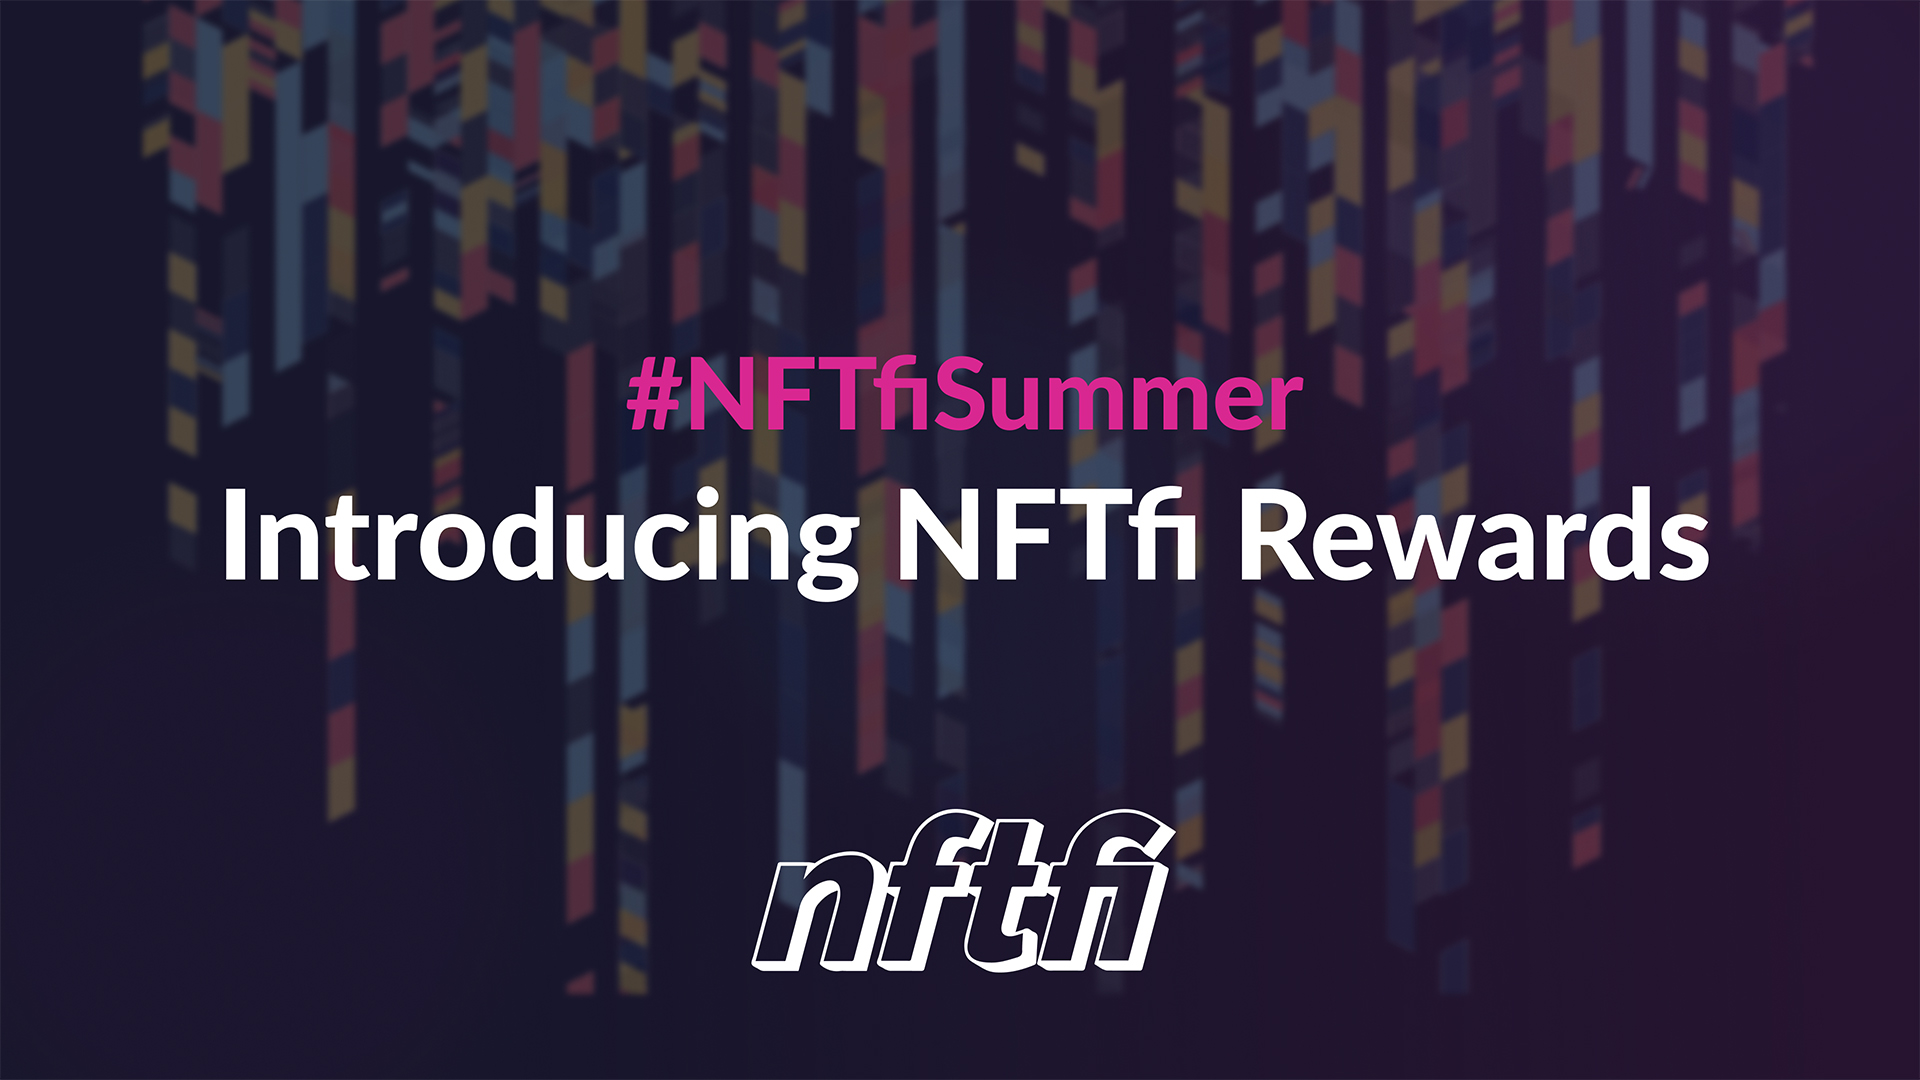 Twitter thread NFTfi Rewards v2